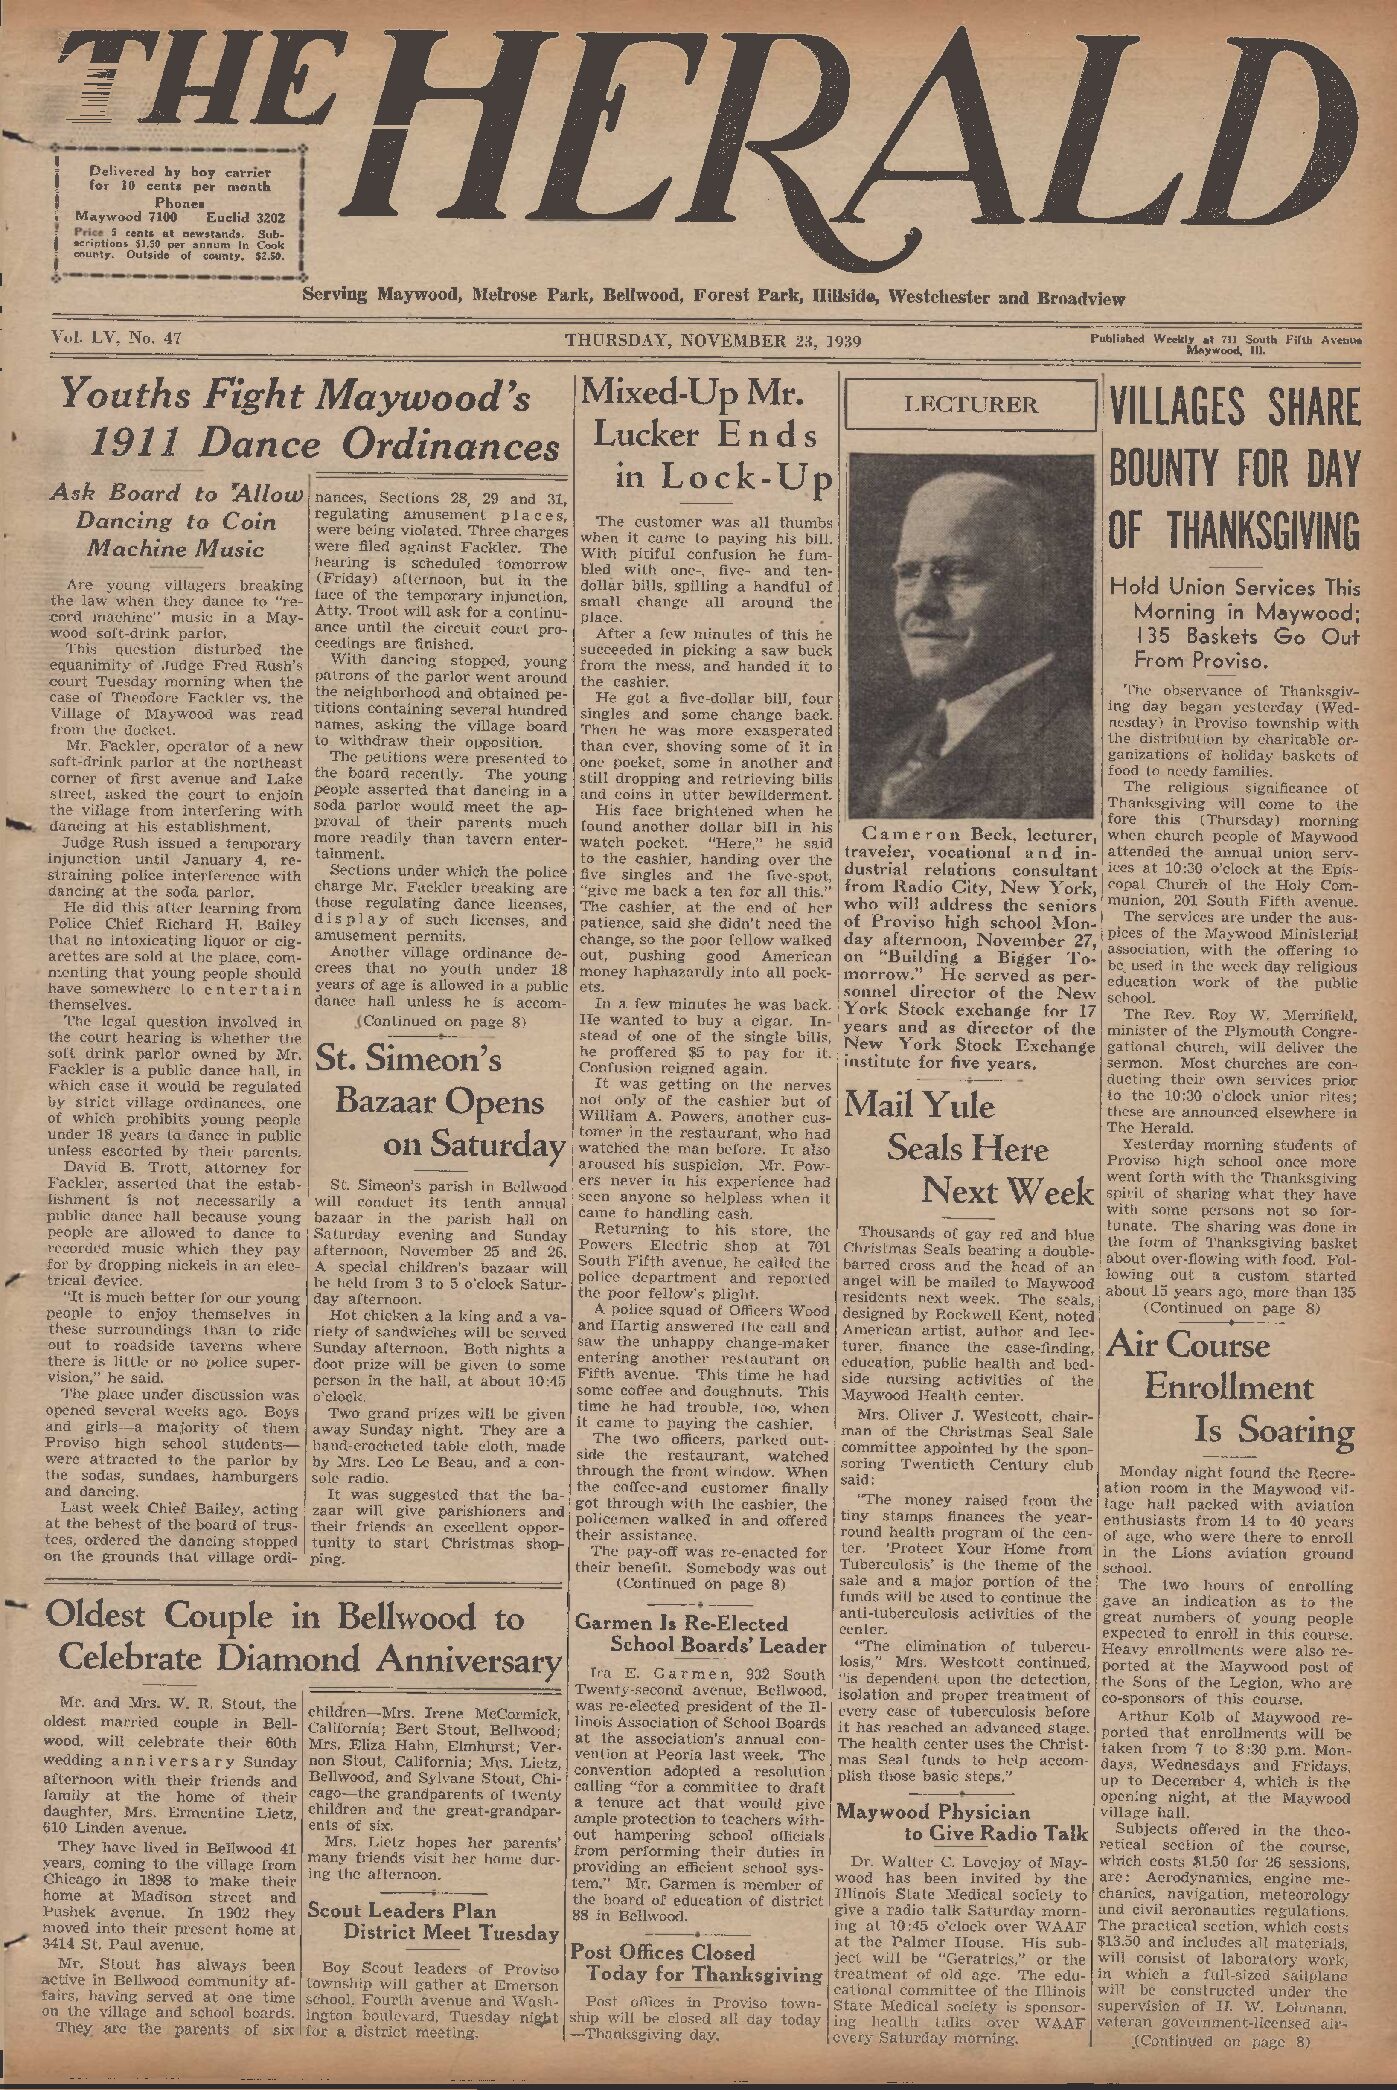 The Herald – 19391123